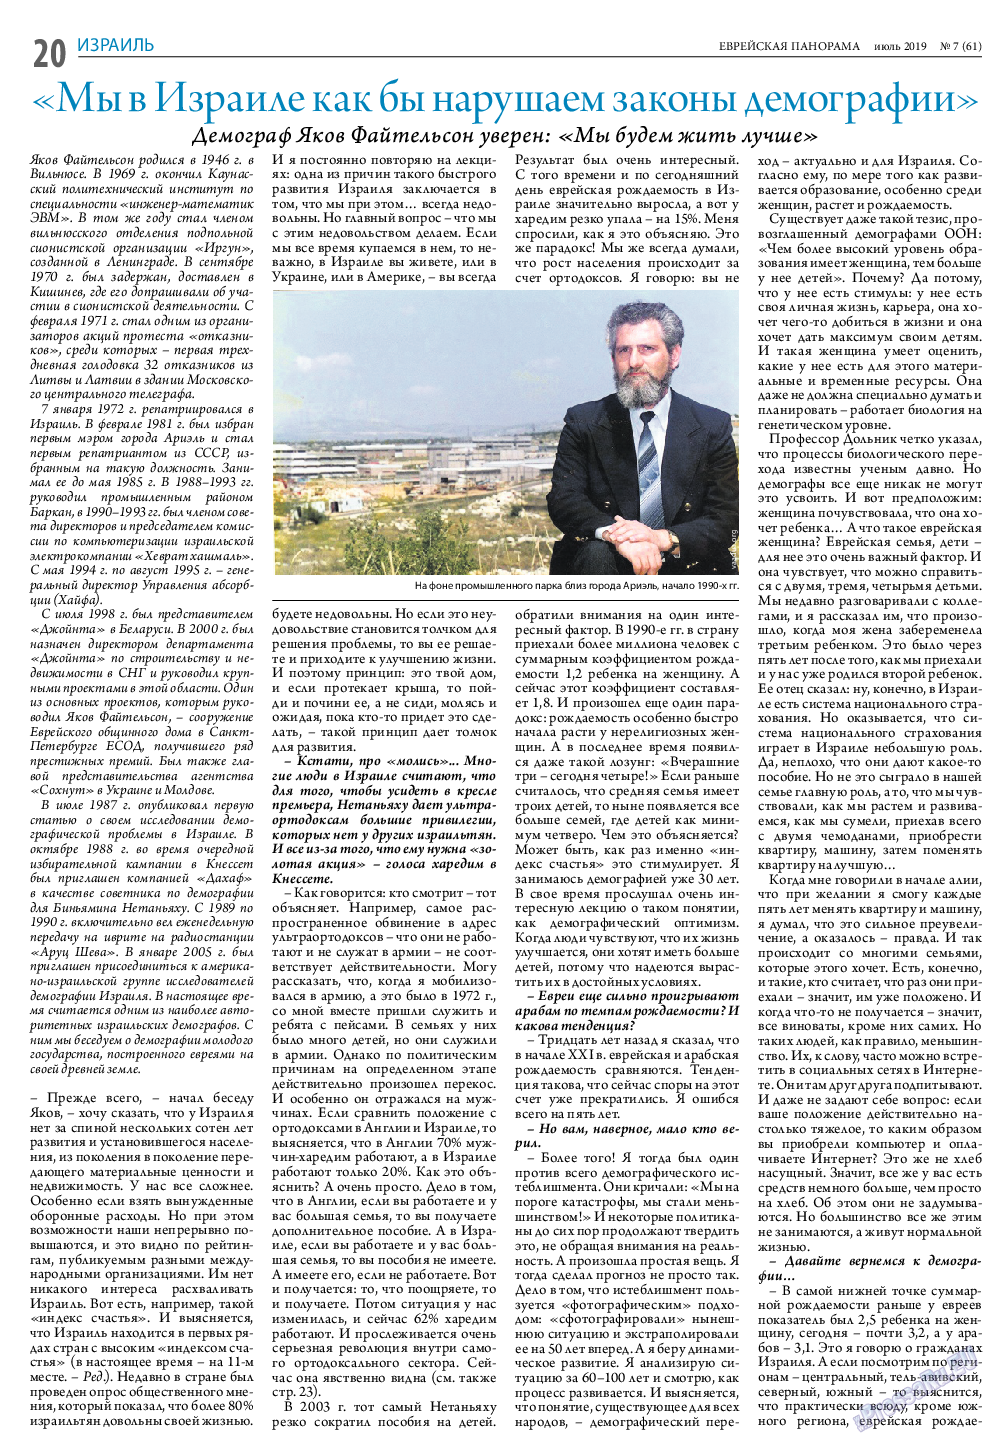 Еврейская панорама, газета. 2019 №7 стр.20